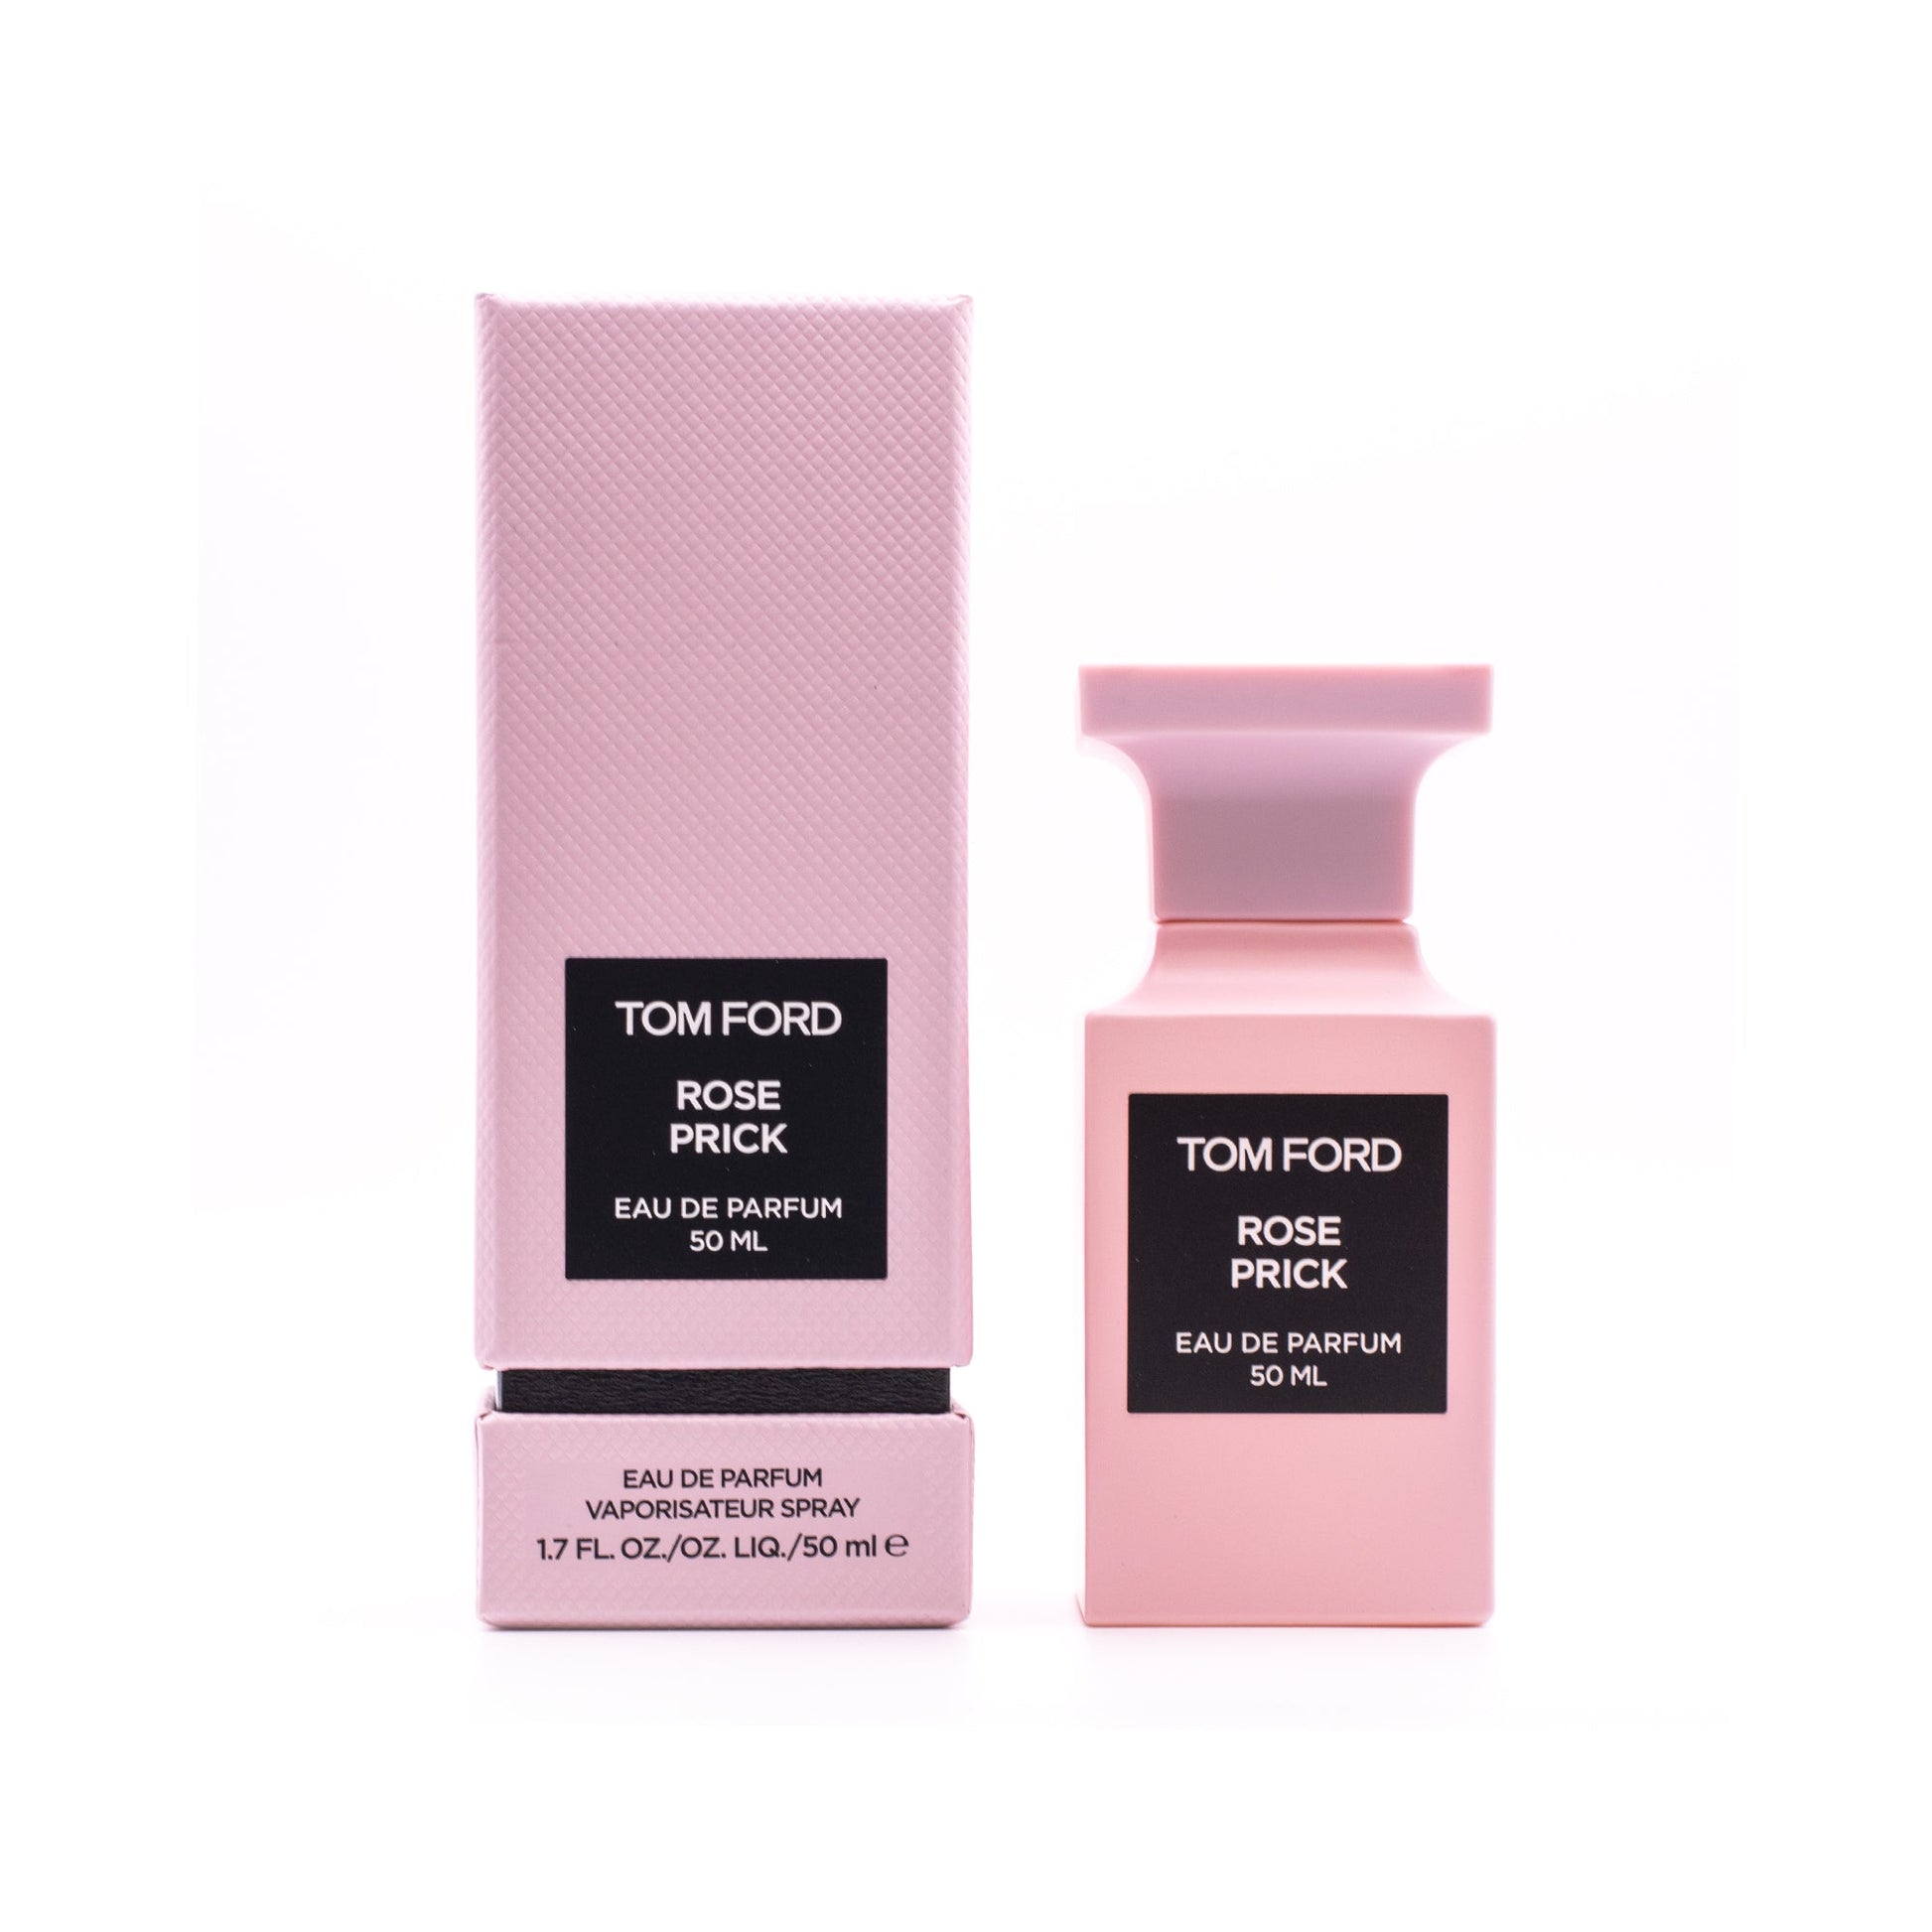 Rose Prick Eau De Parfum for Women by Tom Ford, Product image 1